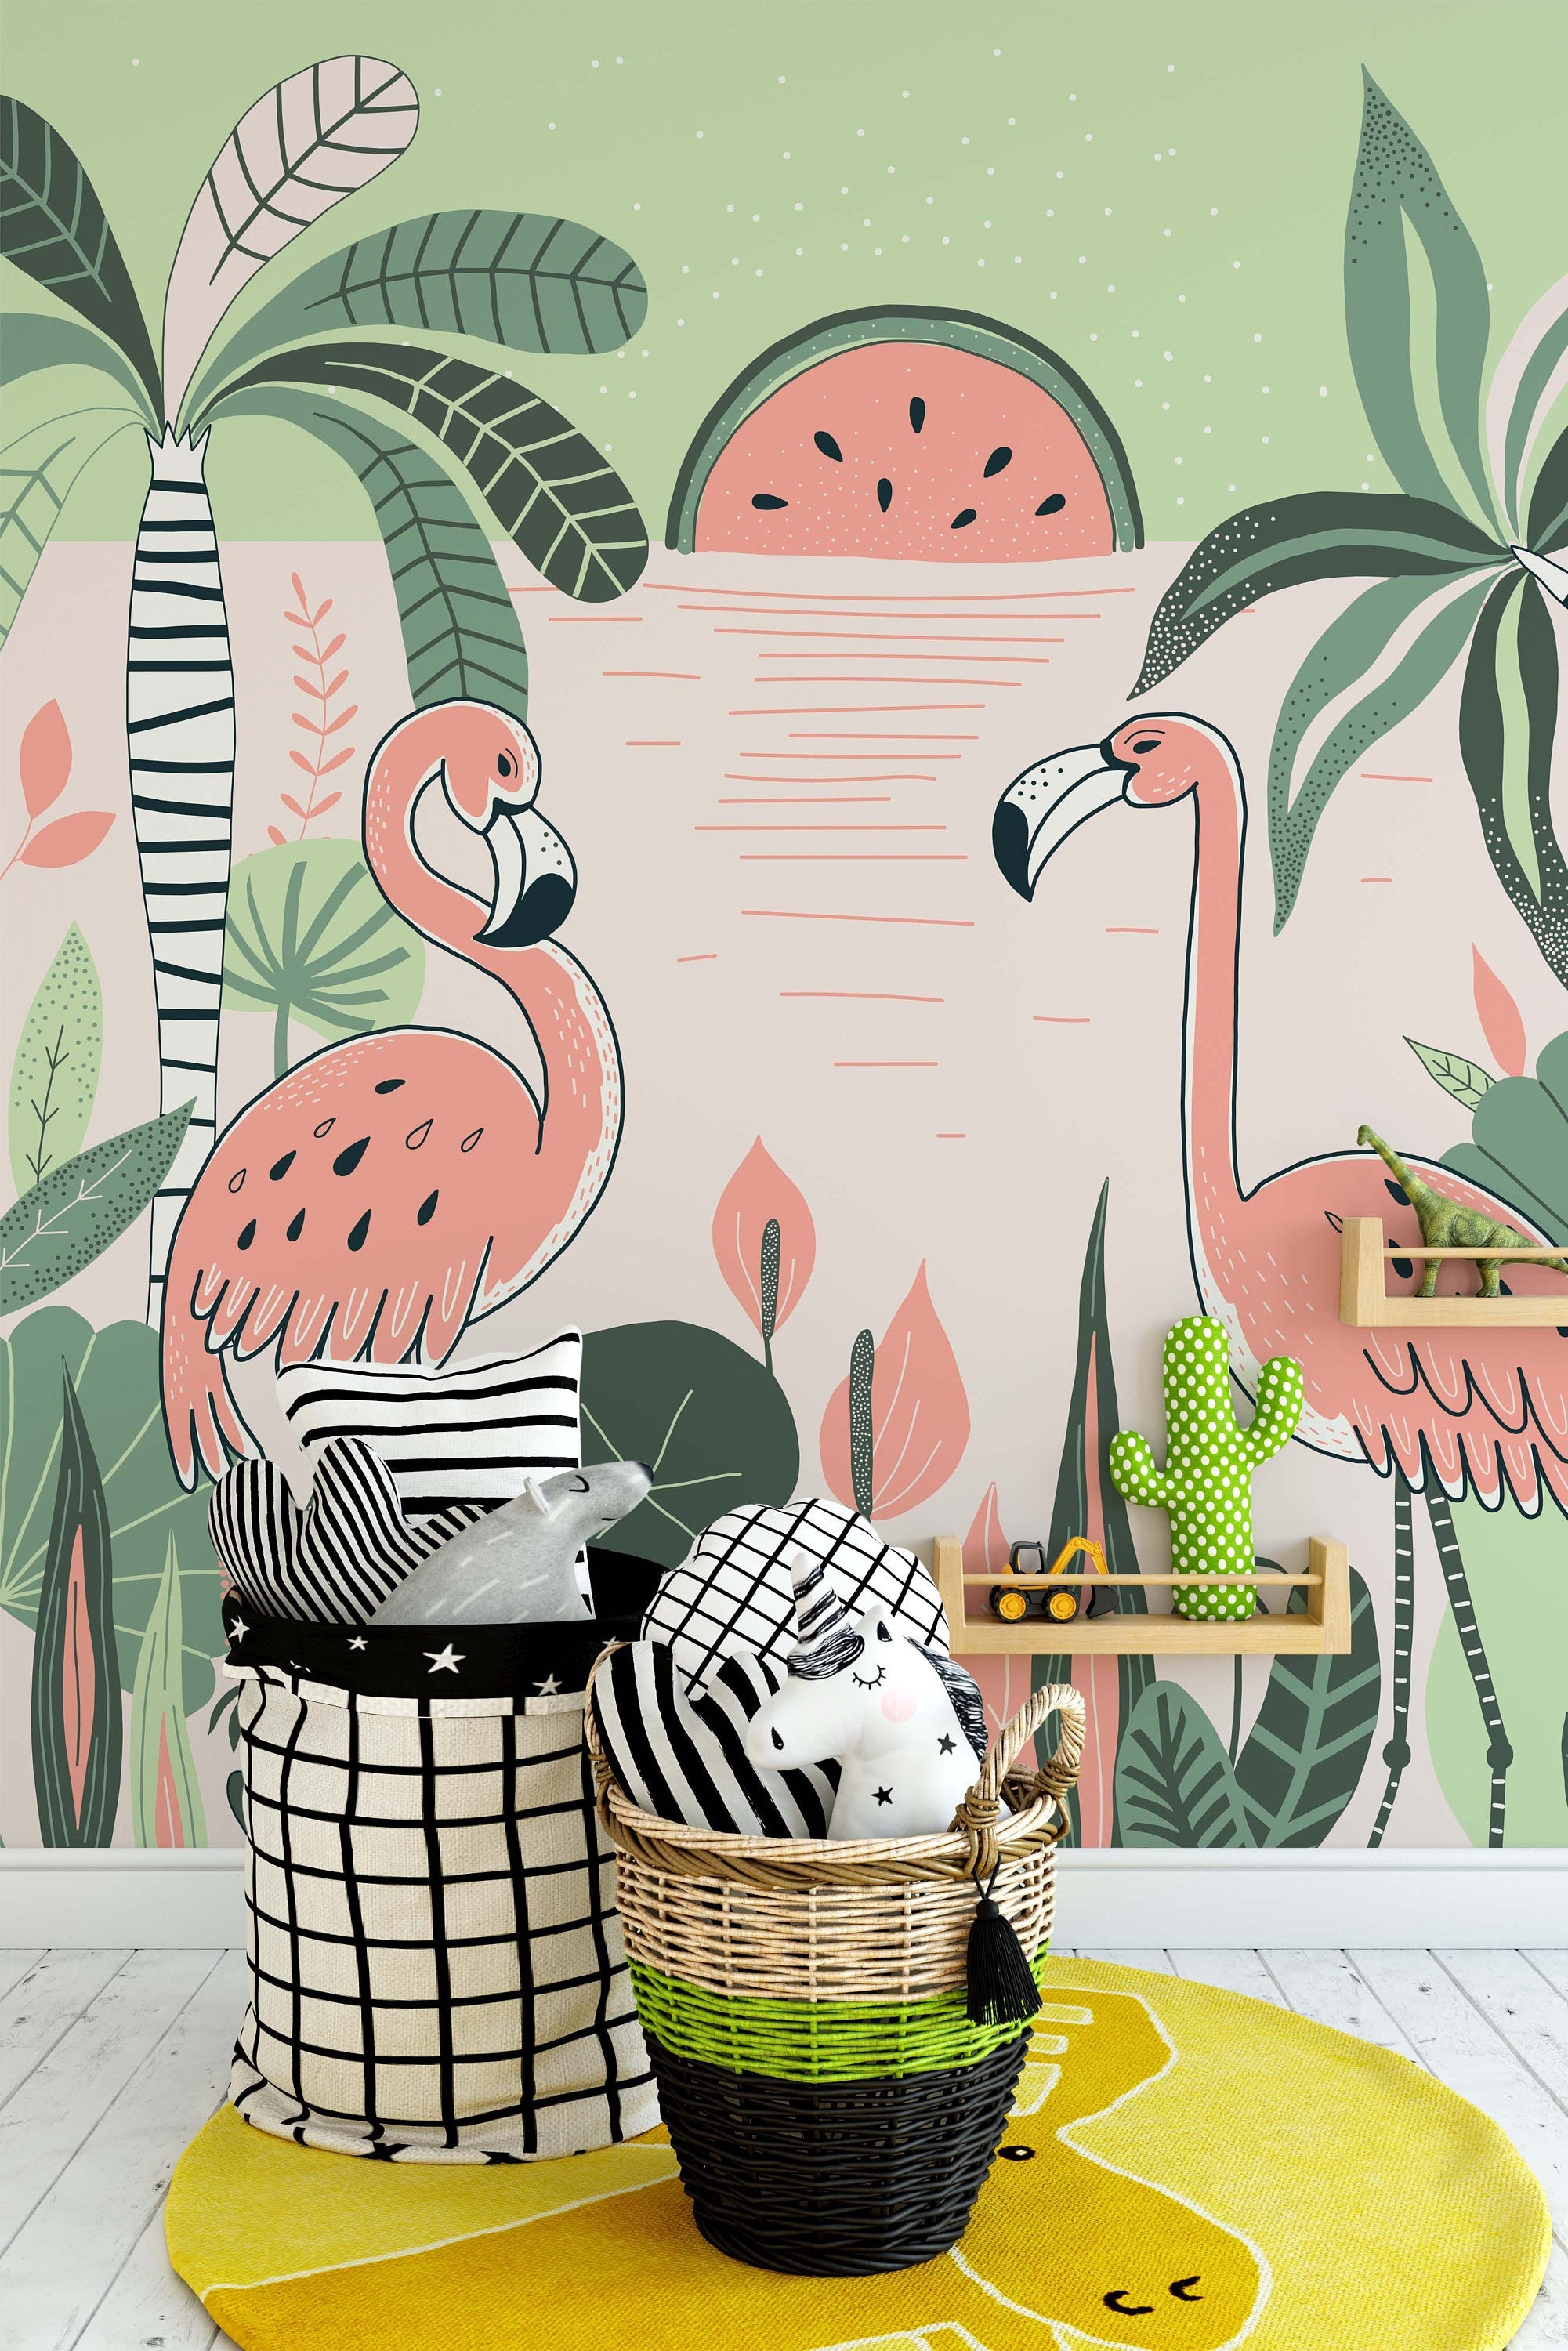 Flamingos Tropical Plants and Trees Background Wallpaper Animal Bedroom Nursery Children Kids Room Mural Home Decor Wall Art